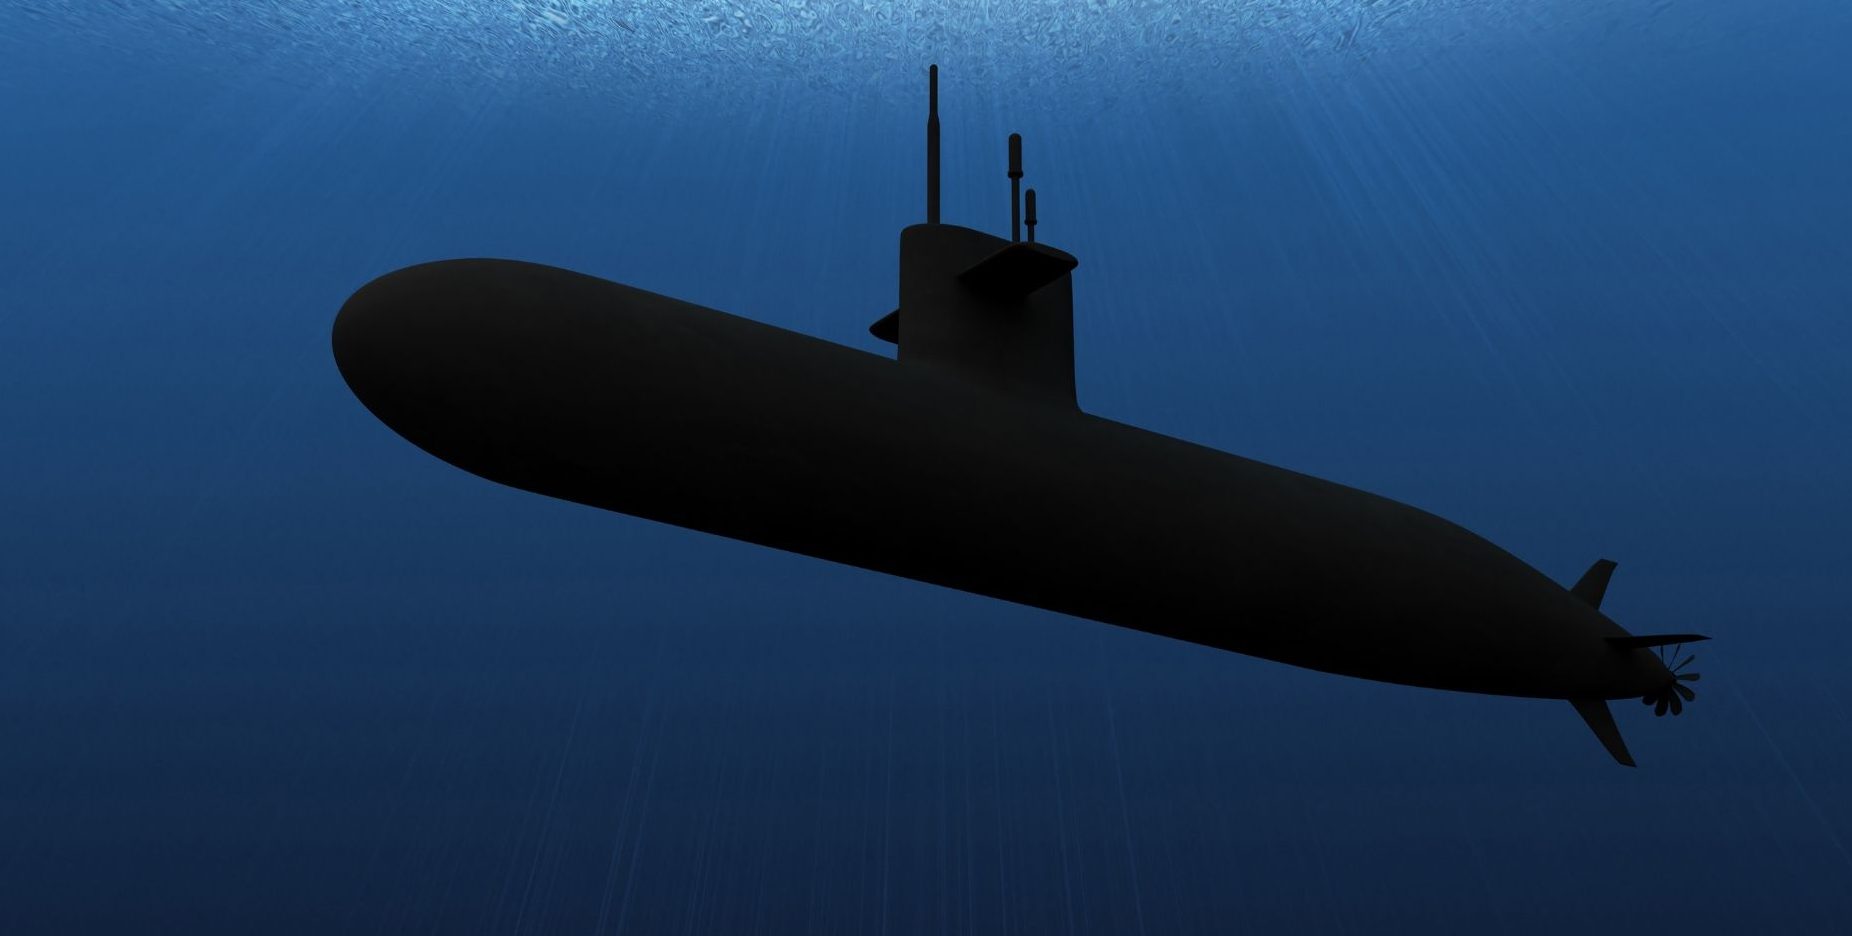 Global Submarines Market